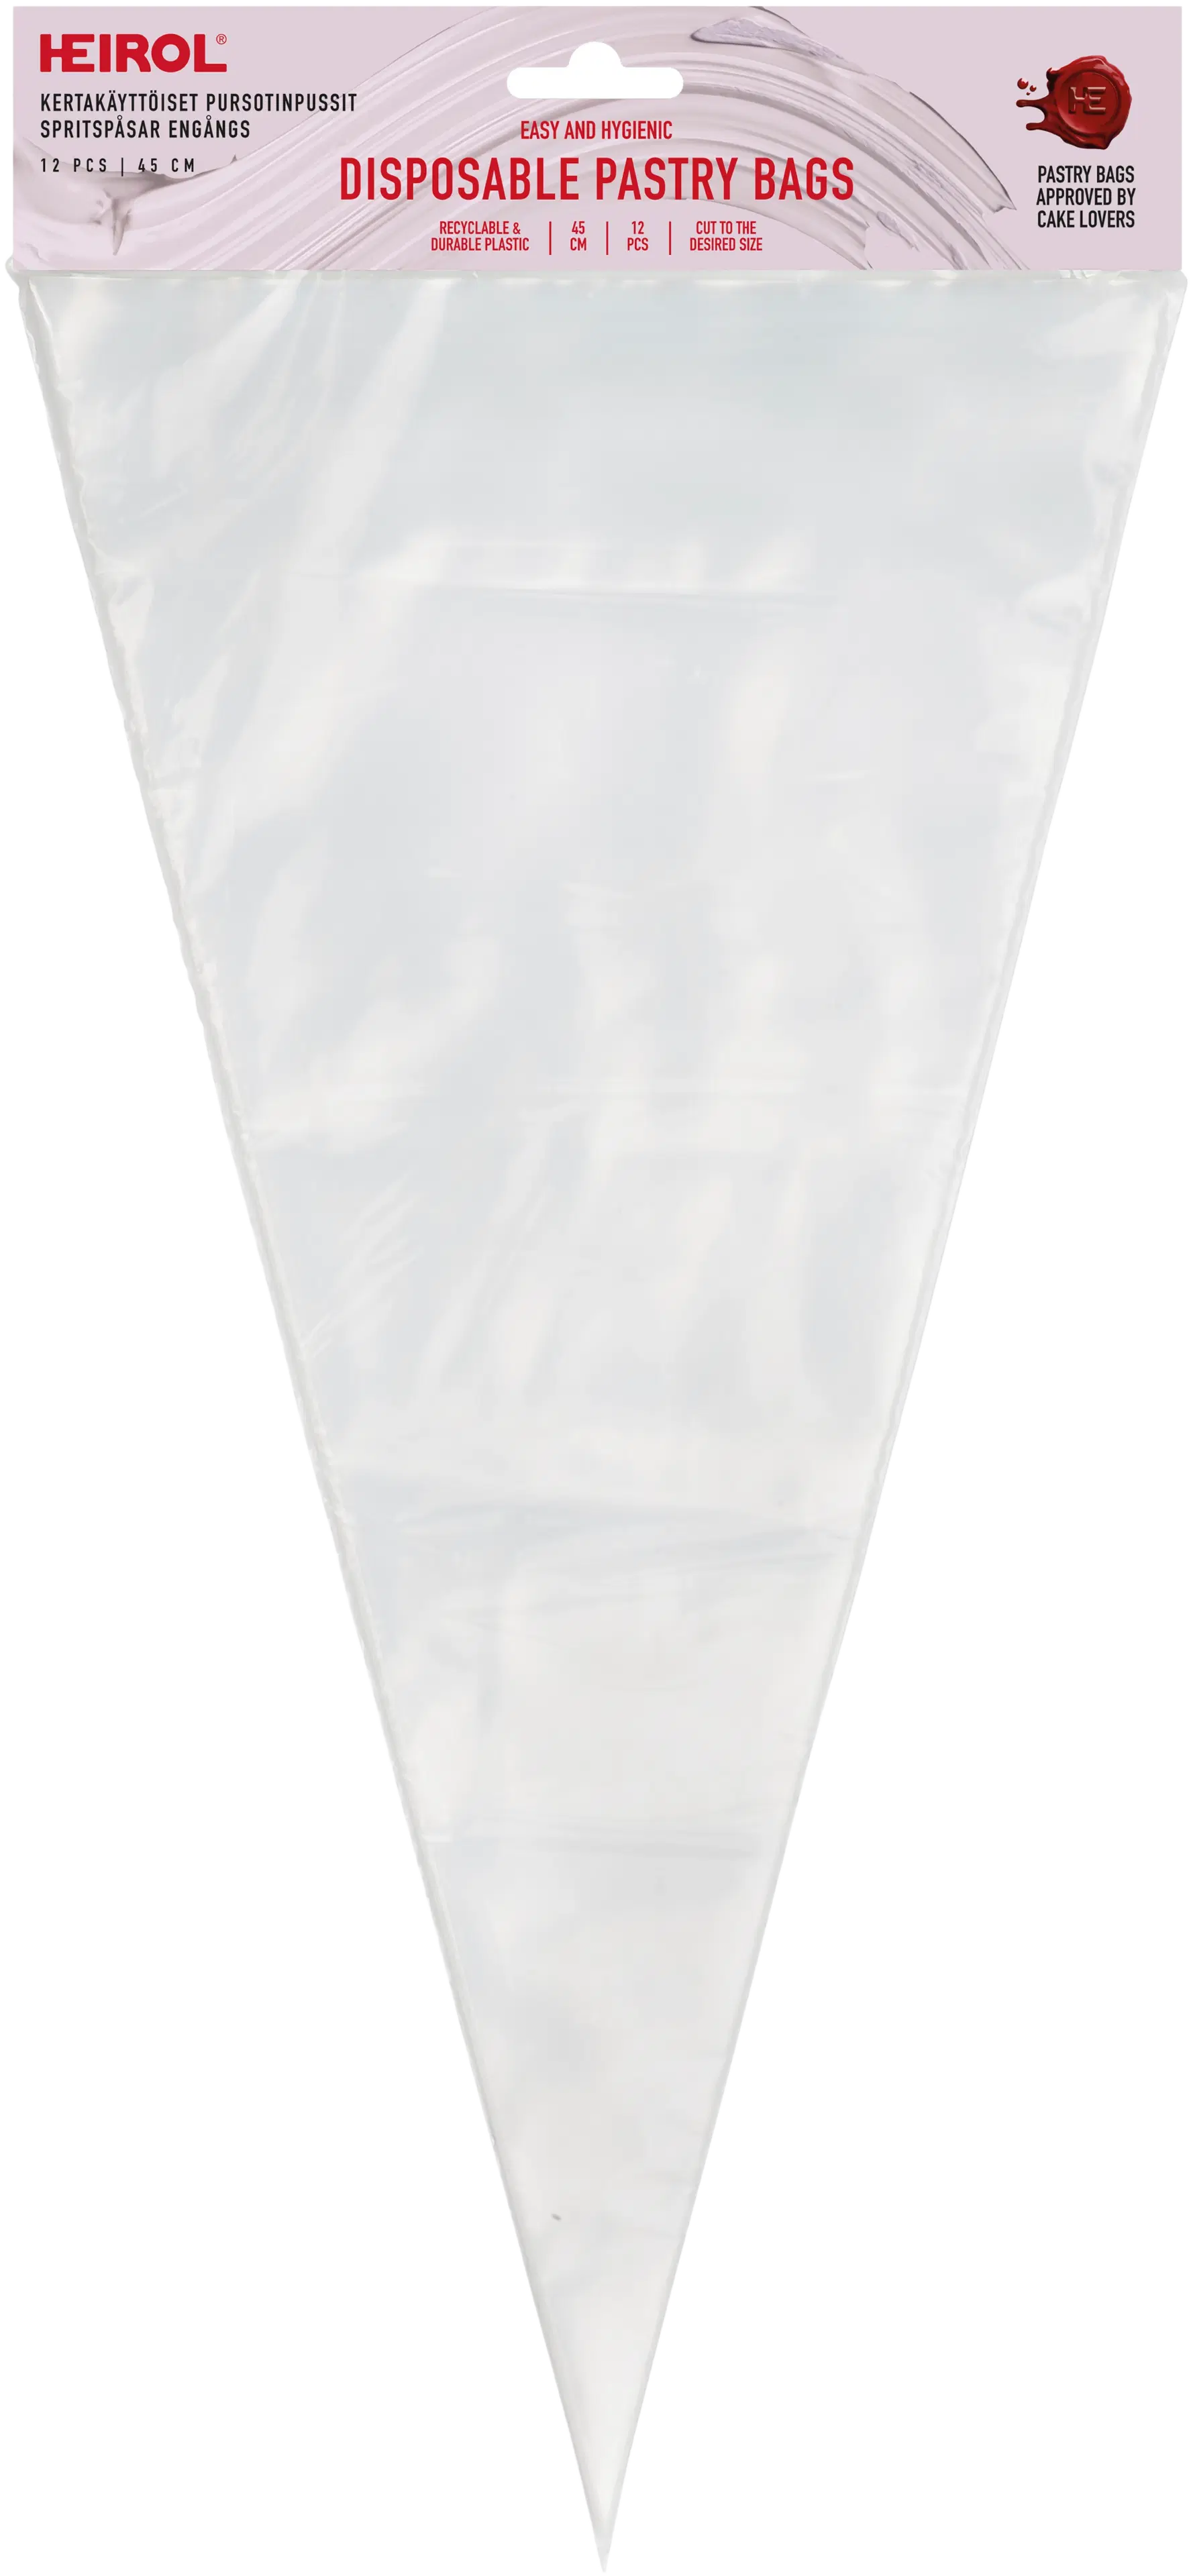 Heirol kertakäyttöiset pursotinpussit 45 cm (12 kpl)